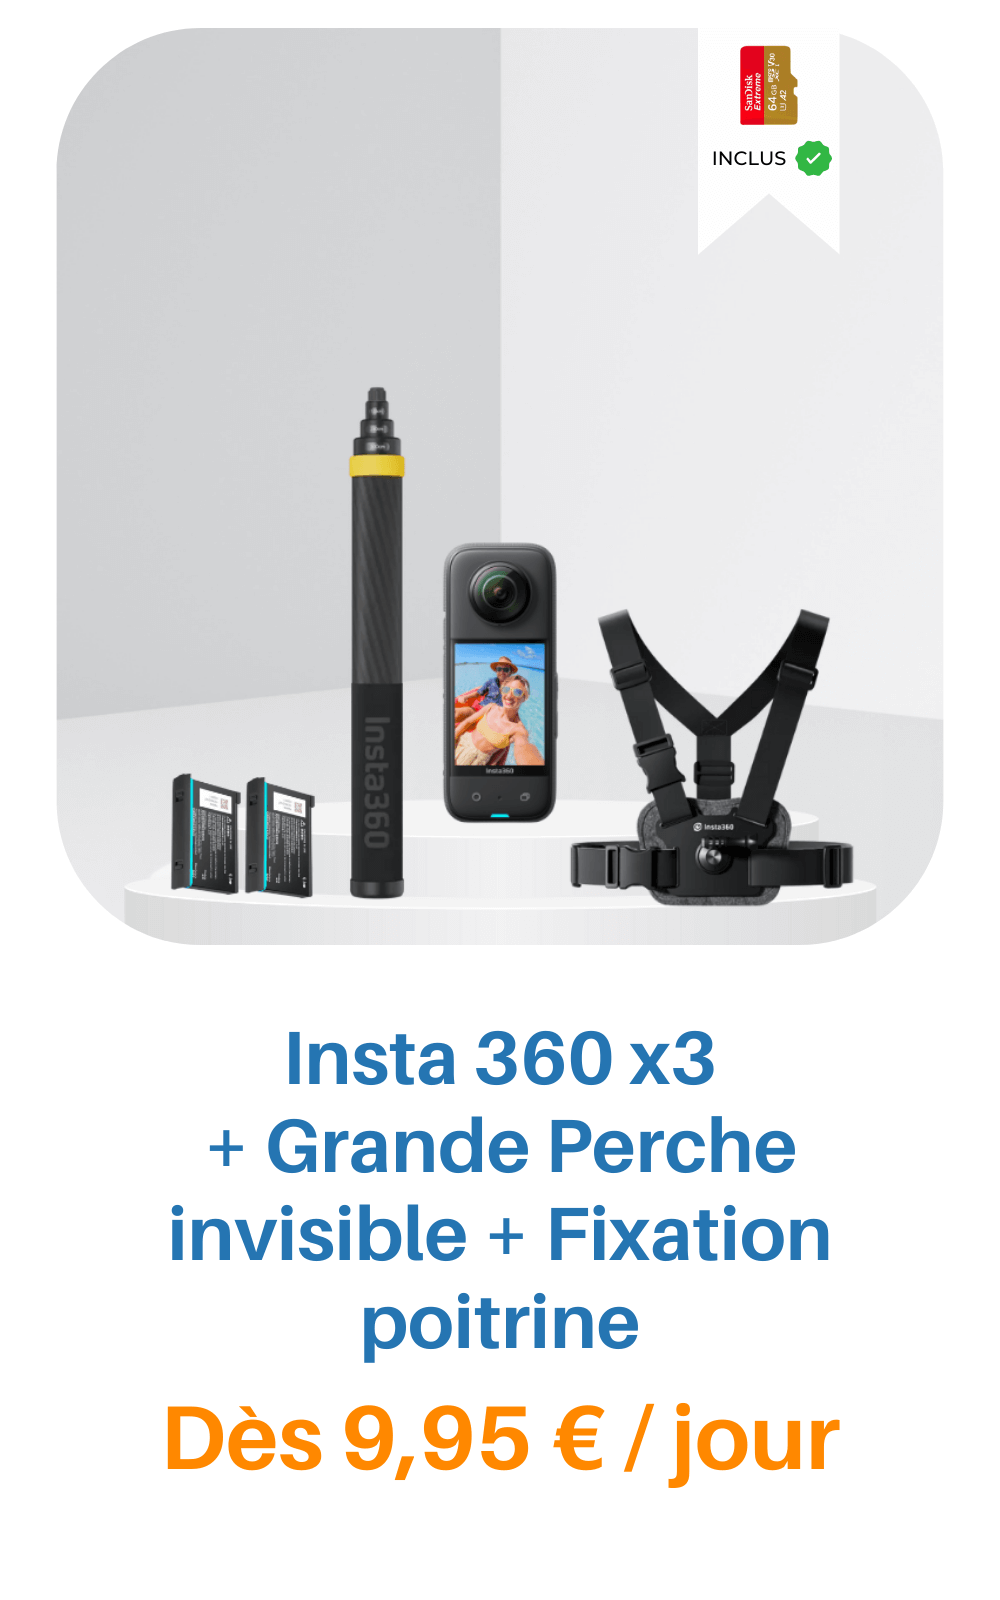 Location Insta360 X3 + Perche invisible + Fixation frontale dès 9,45€/jour